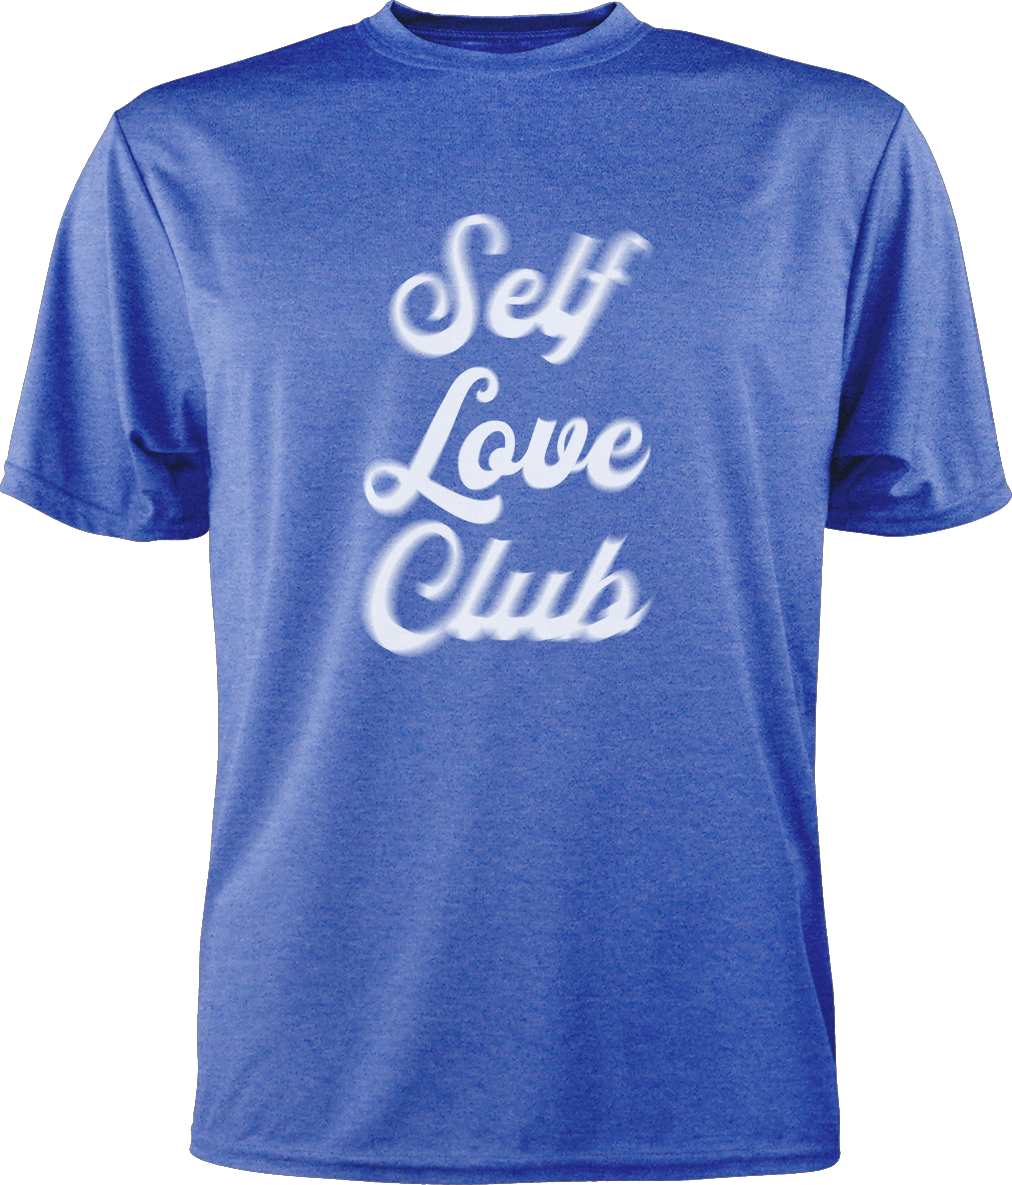 Self Love Club Tee